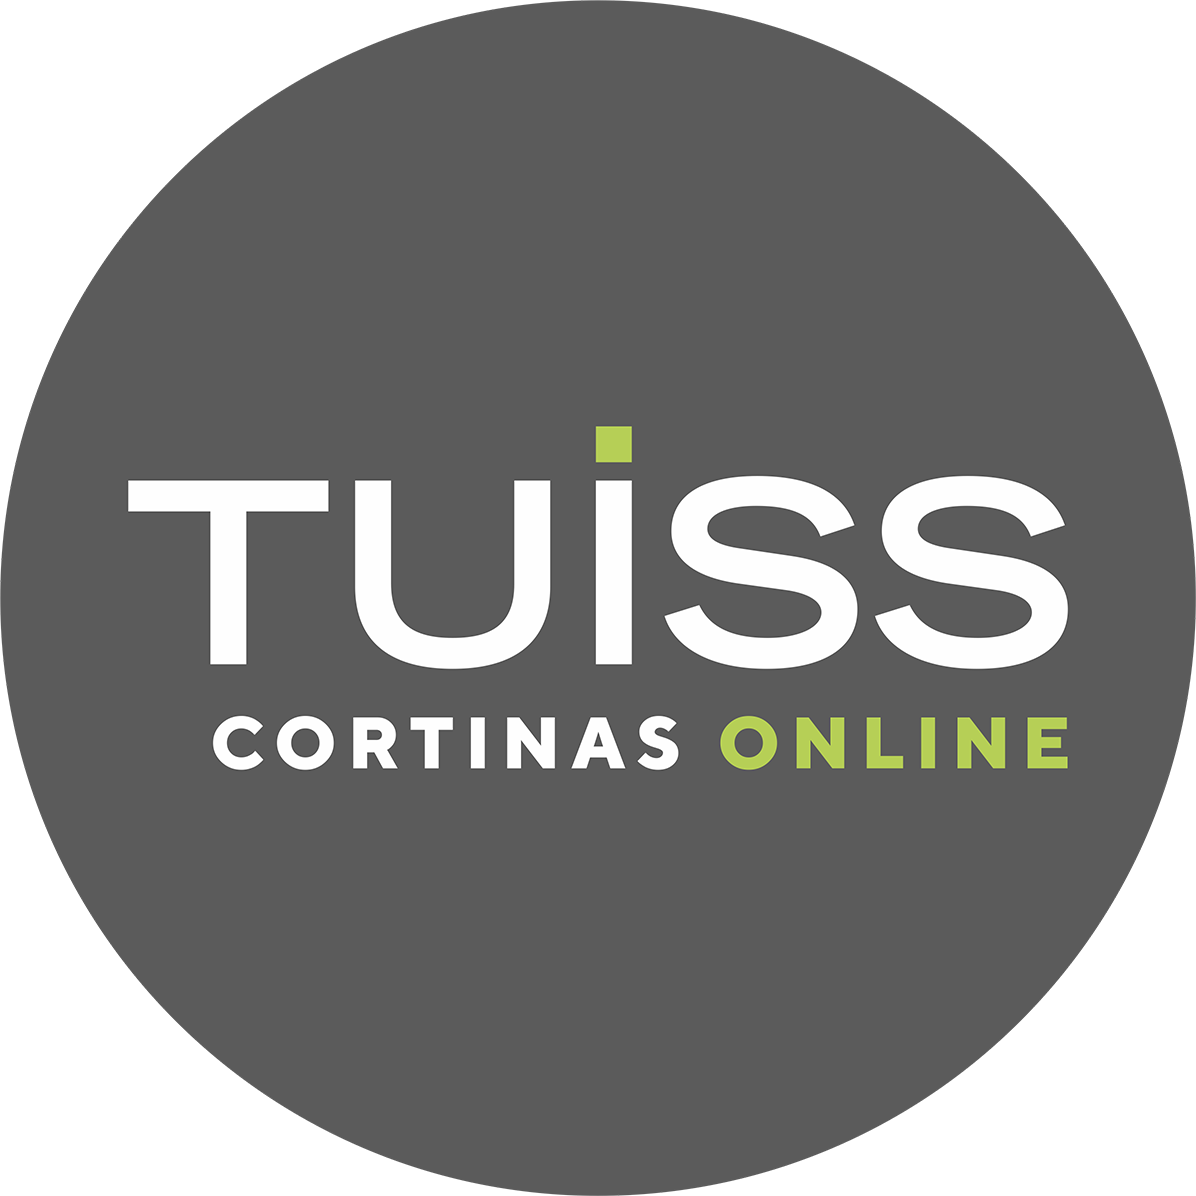 Tuiss Cortinas Online